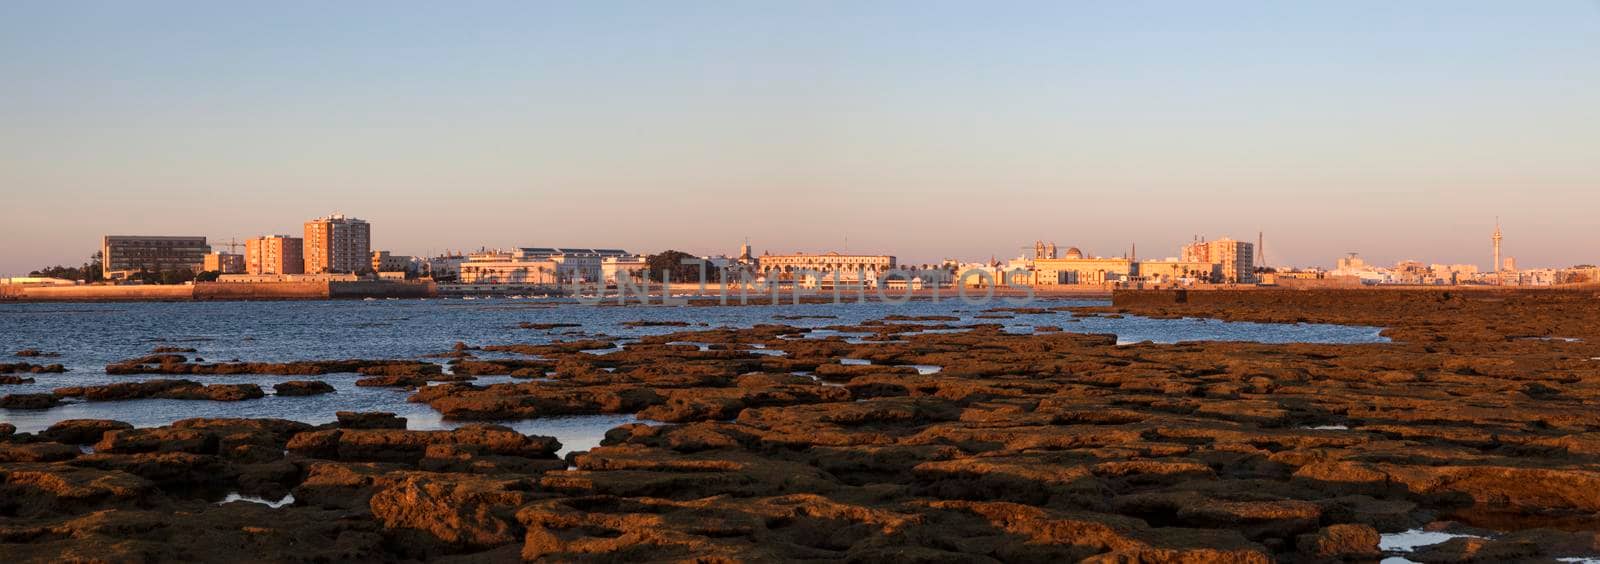 Panorama of Cadiz by benkrut